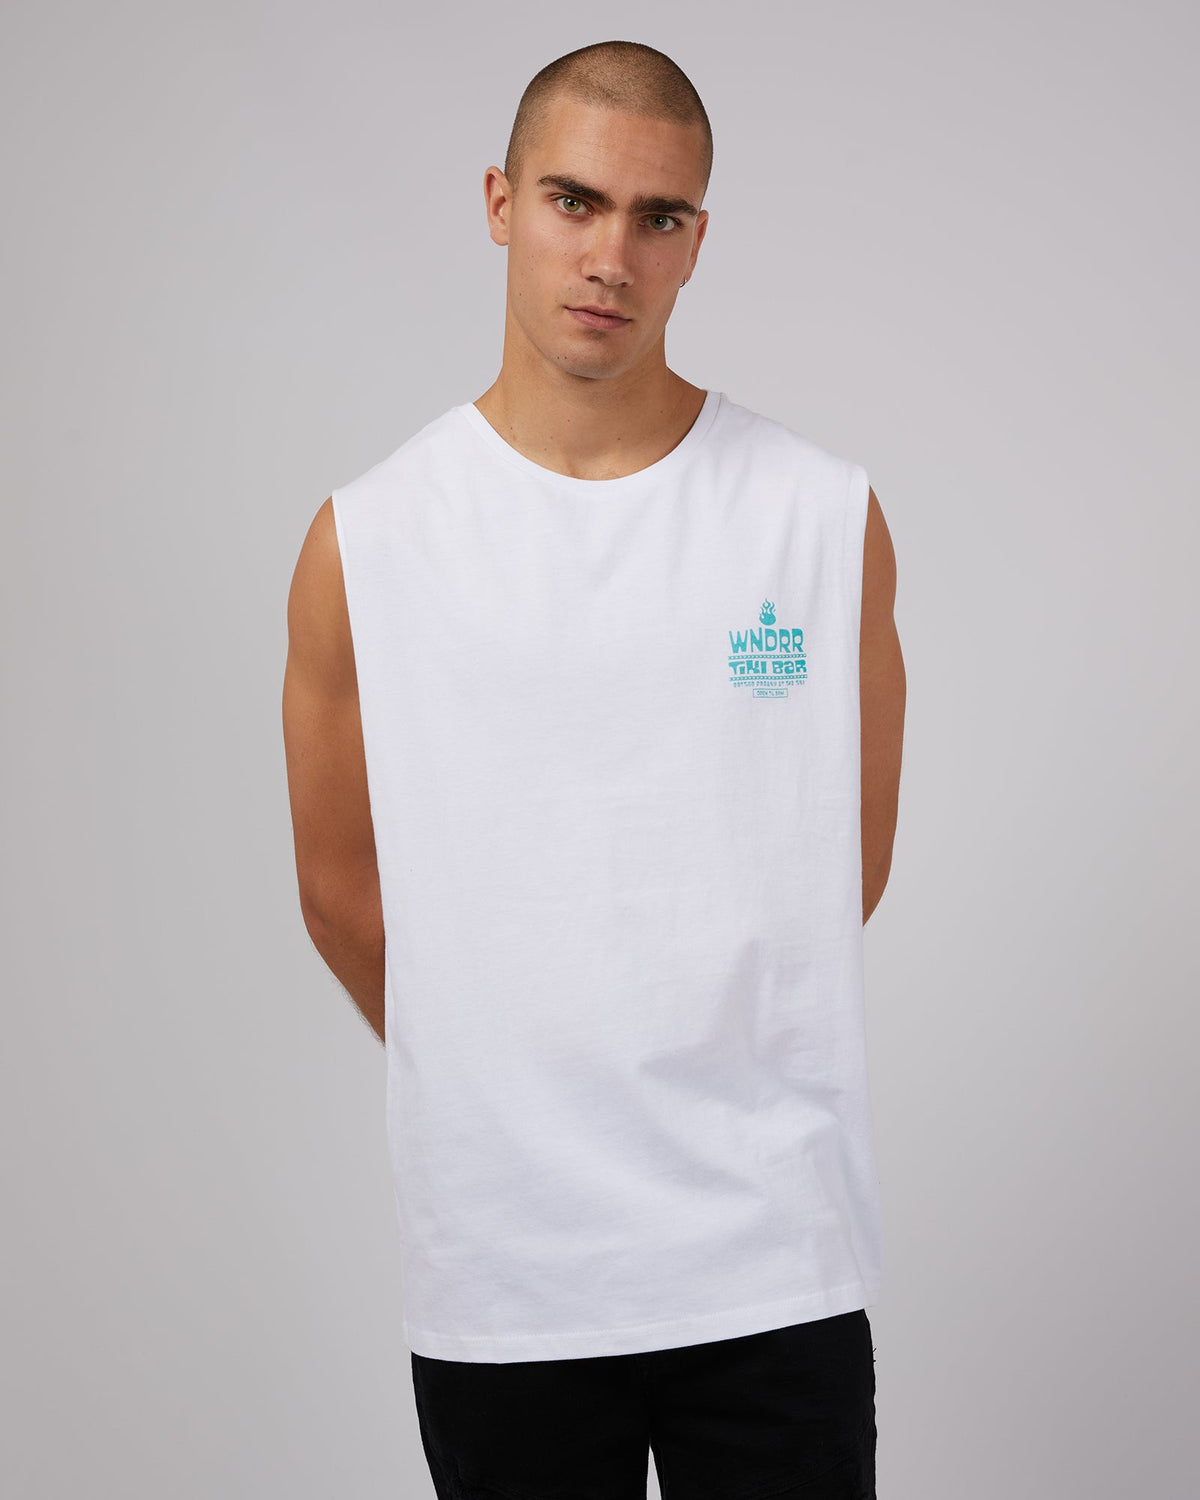 Wndrr-Tiki Bar Muscle Top White-Edge Clothing